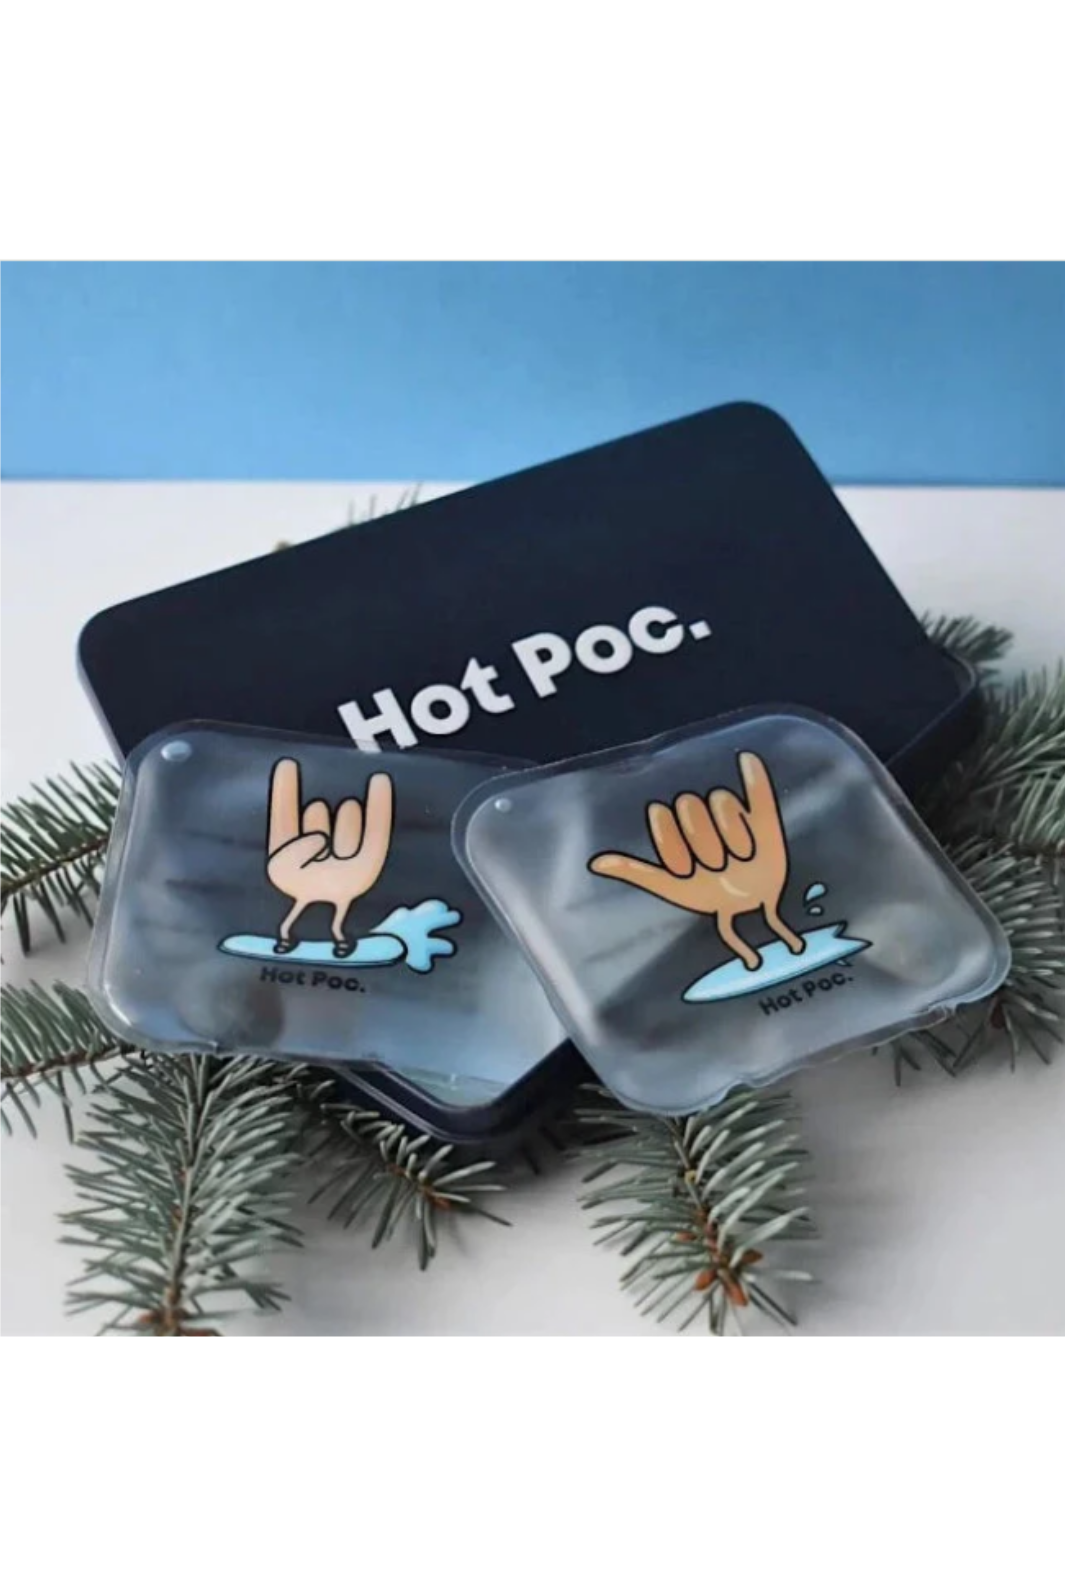 Hot Poc Hand Warmers. Reusable